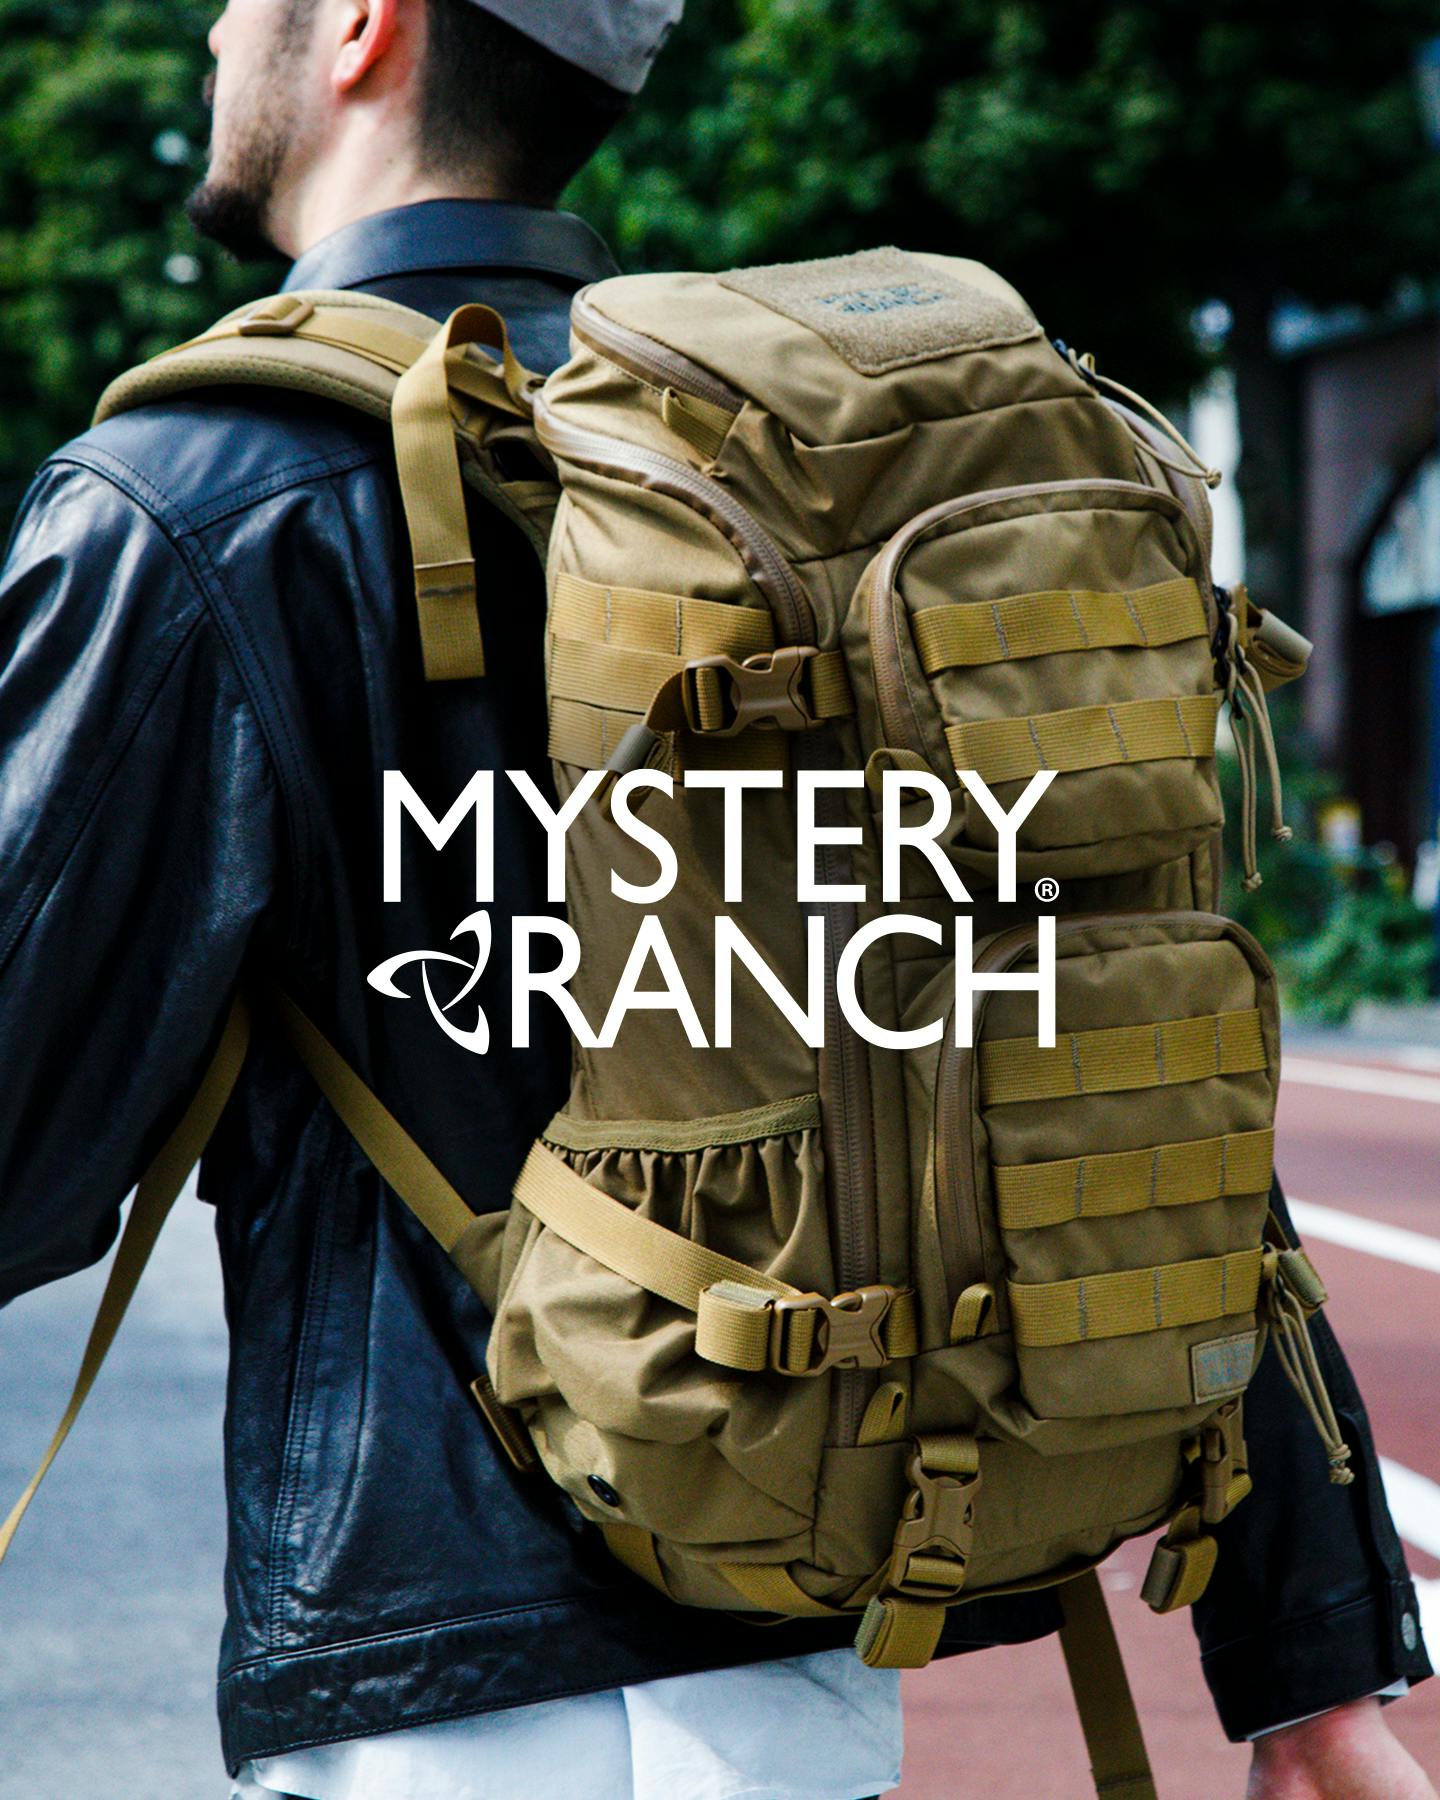 Mystery Ranch Bag worn by model